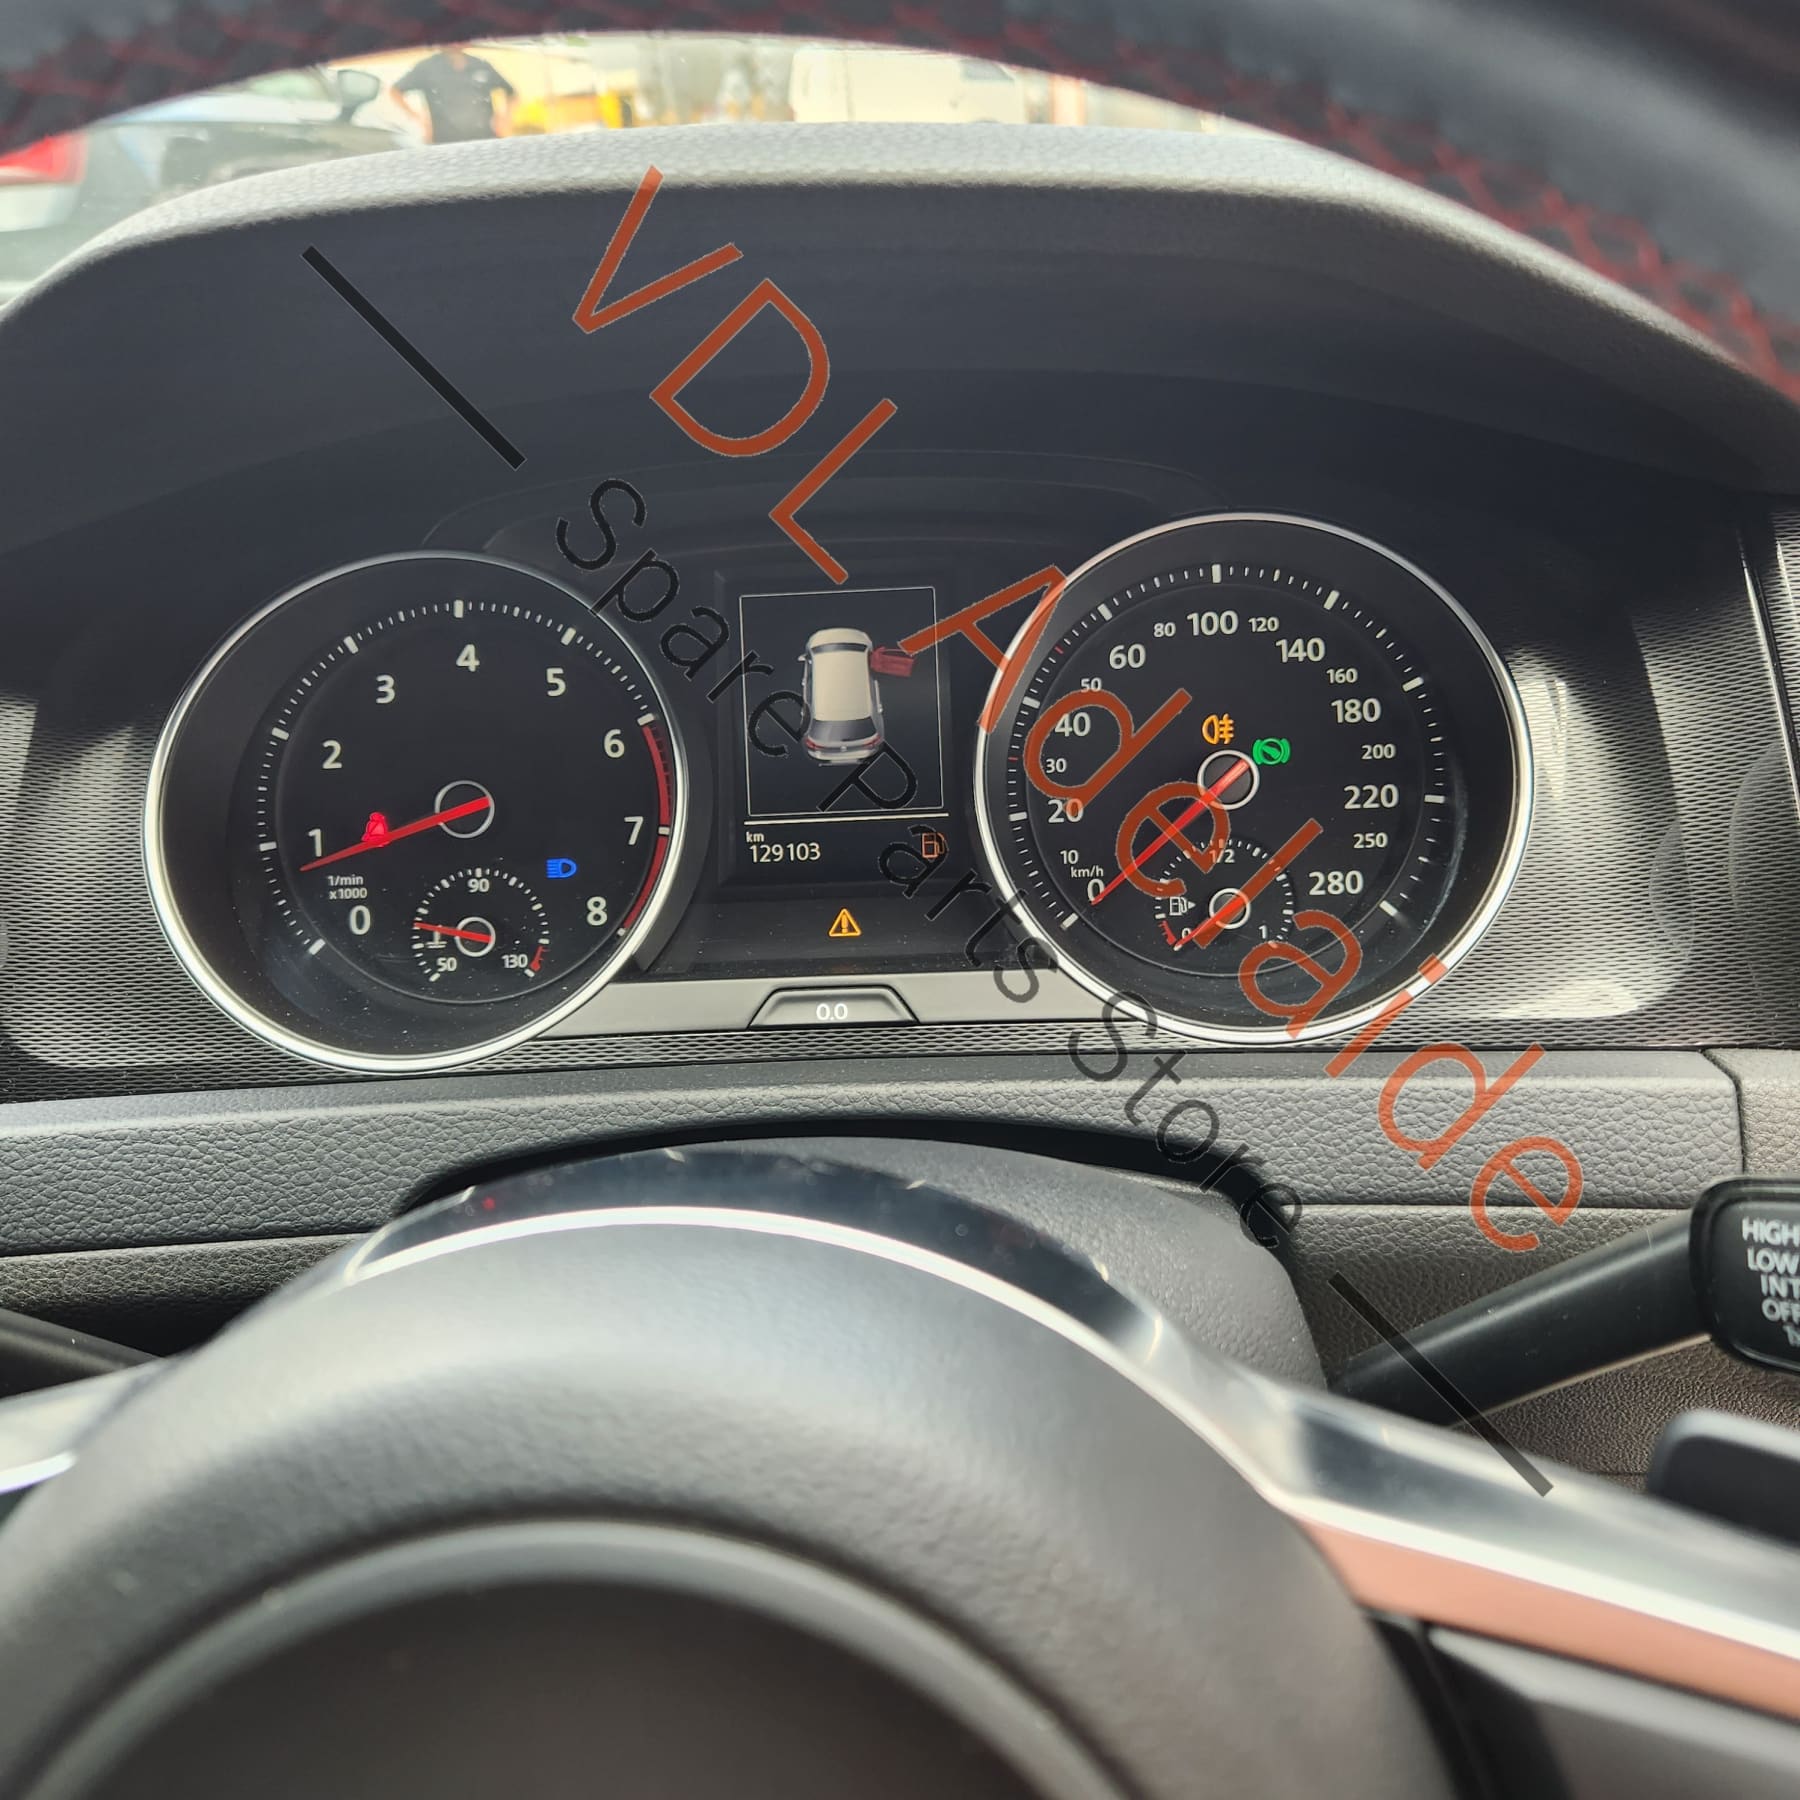 5Q0512521F    VW Golf GTi Mk7 Rear Left Suspension Level Sensor With Poles 5Q0512521F